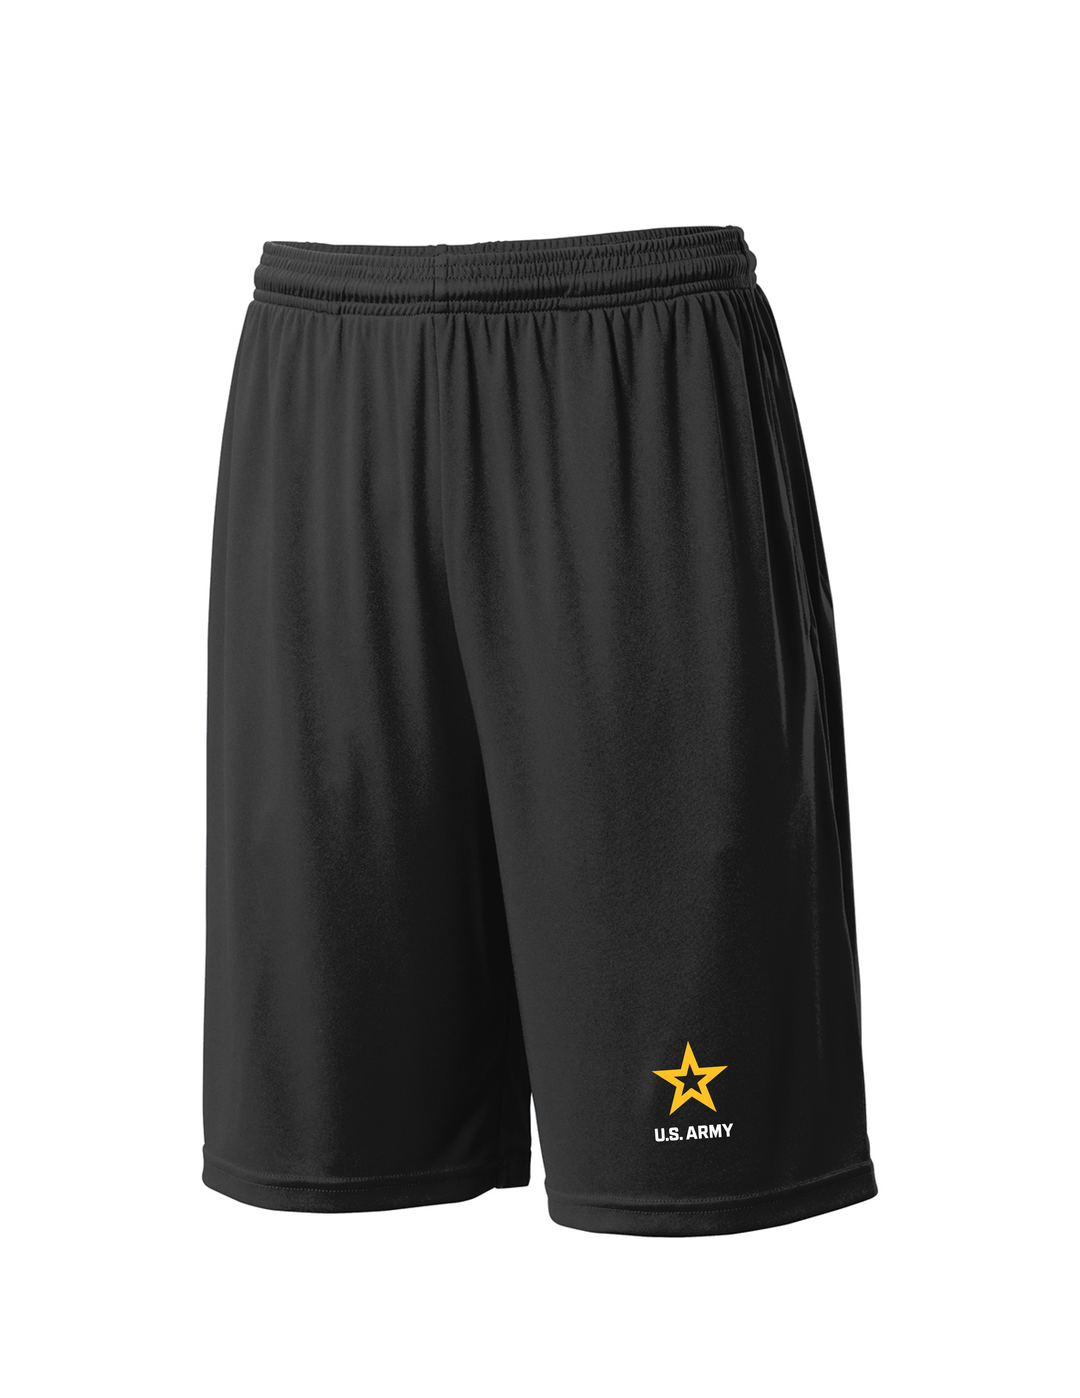 U.S. Army Mens Shorts